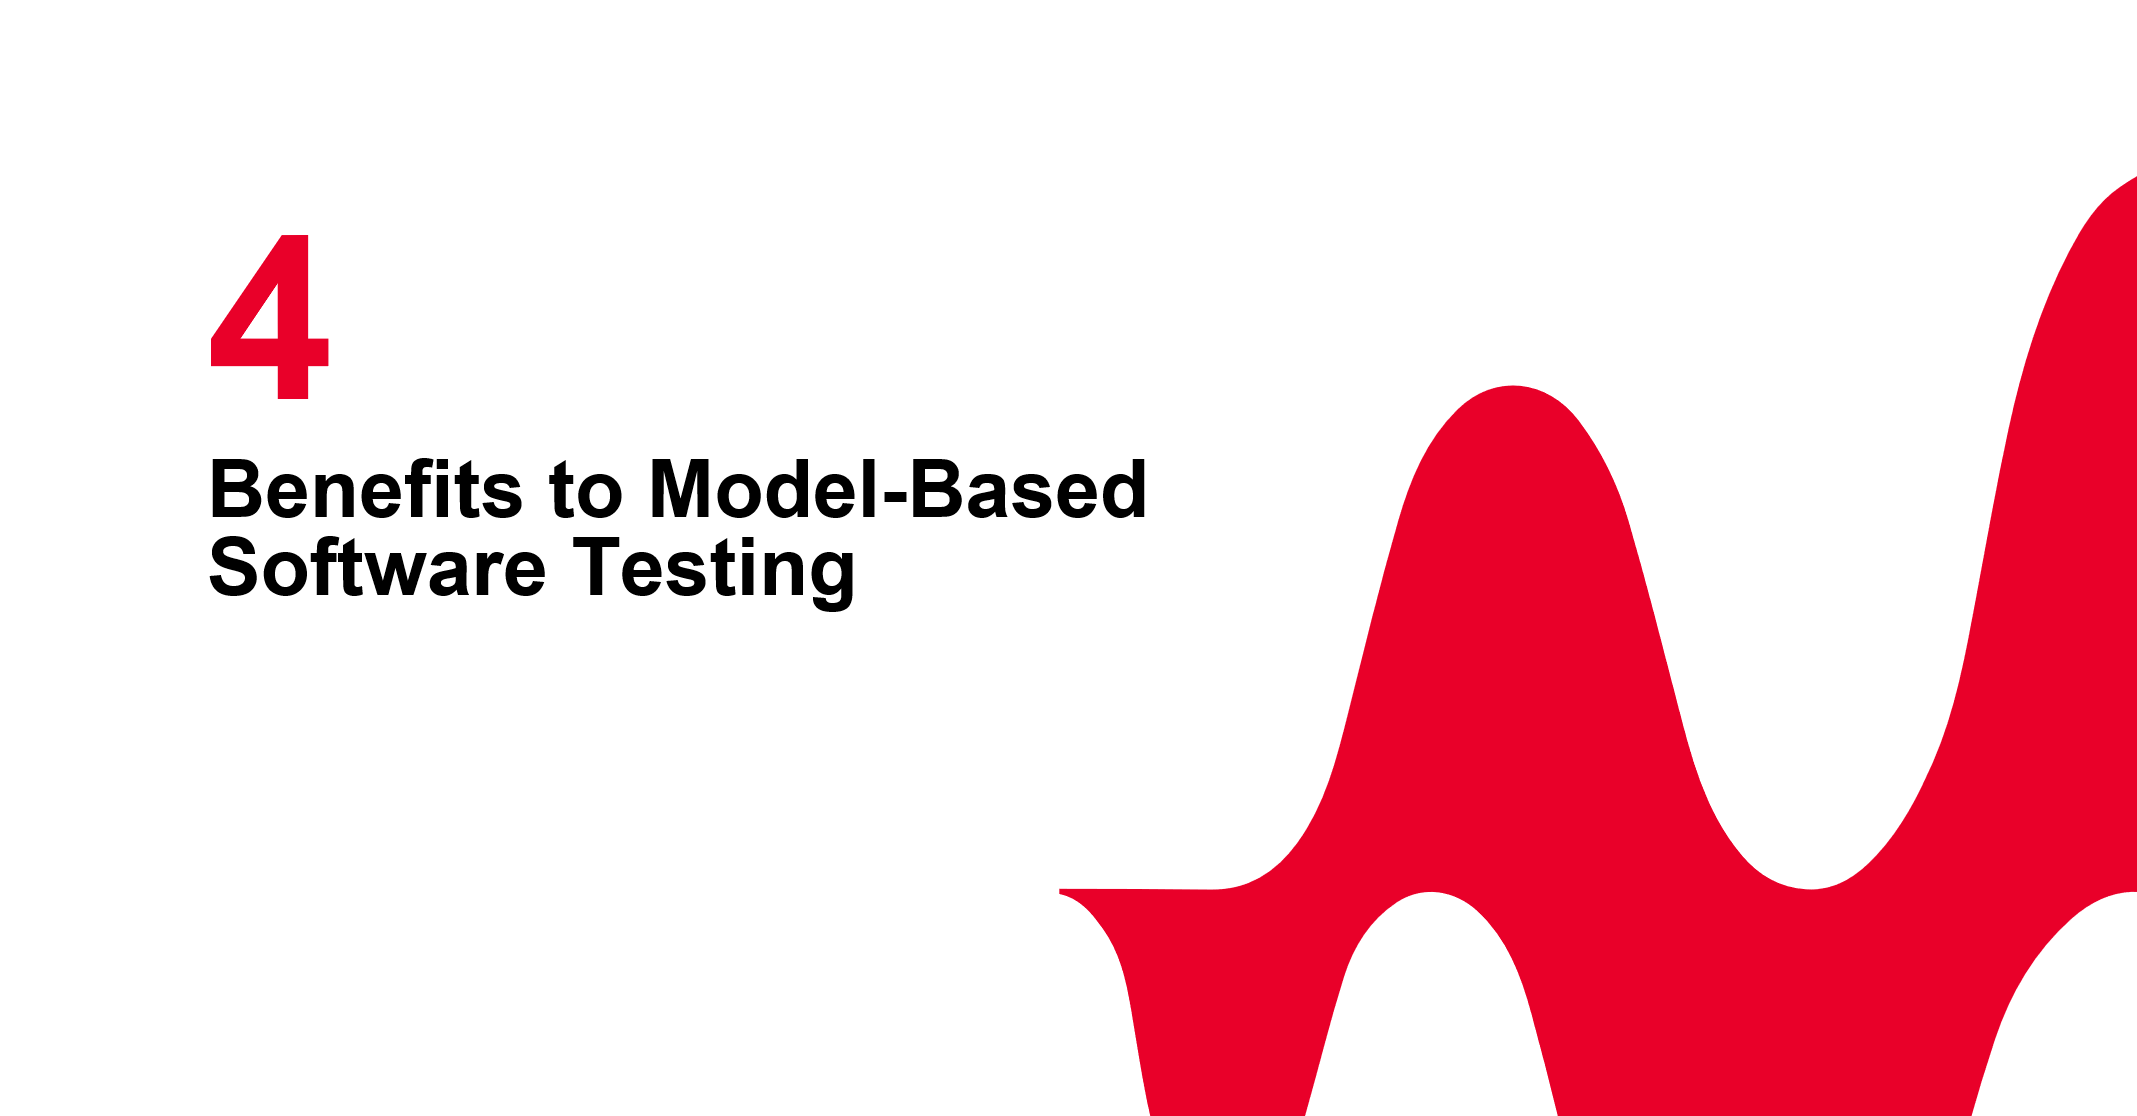 Benefits of Model-Based Software Testing